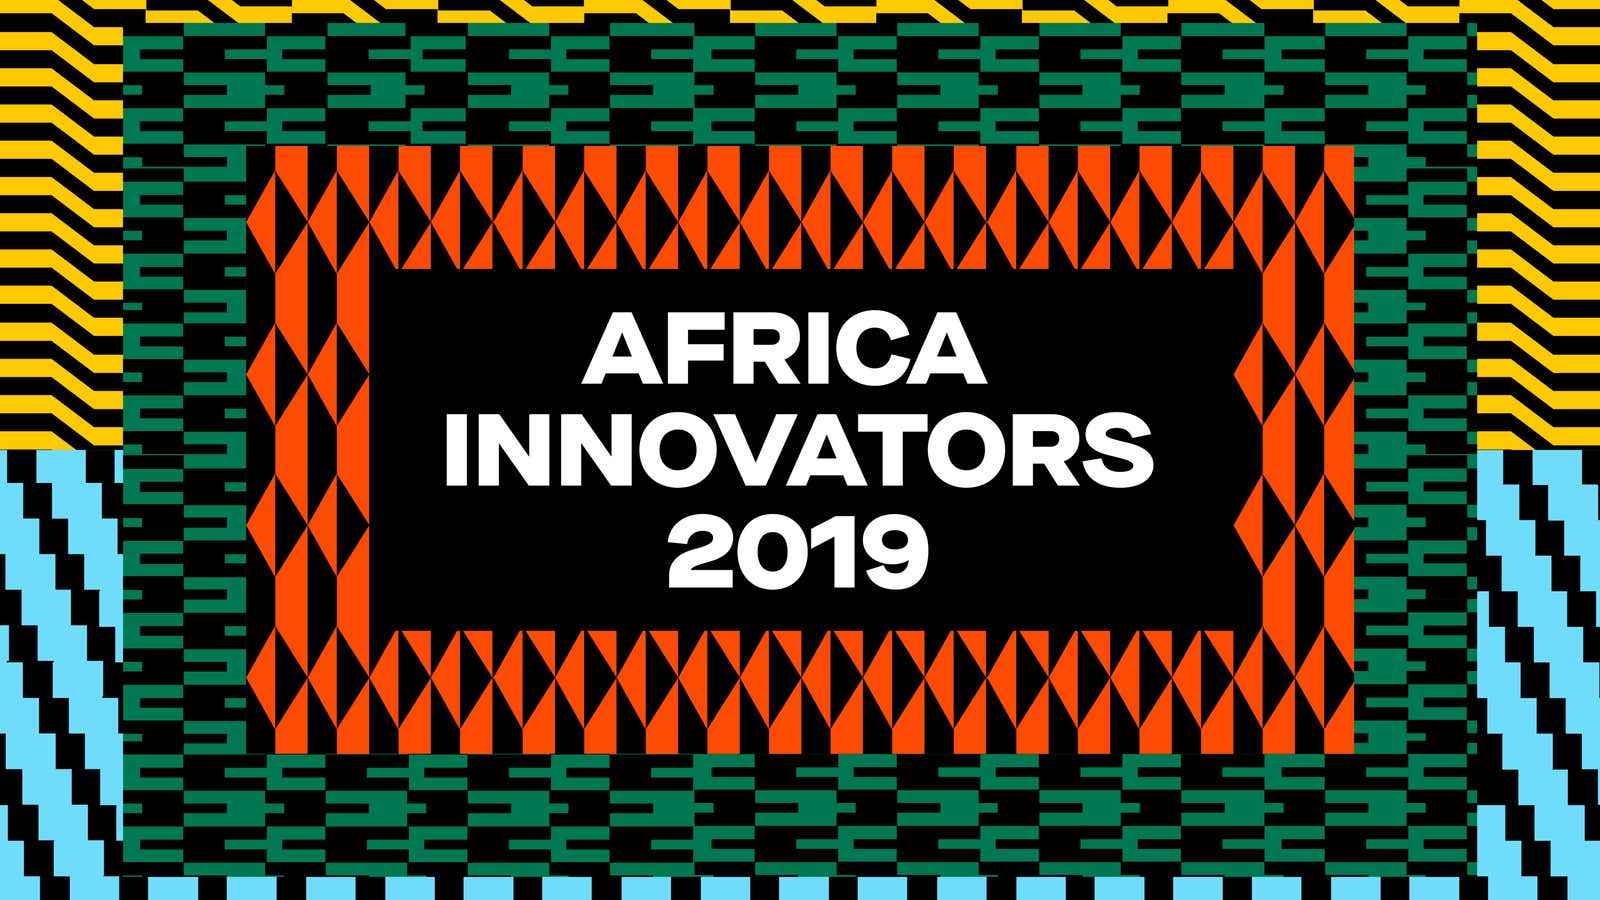 Quartz Africa Innovators 2019: leading the change for Africa’s future